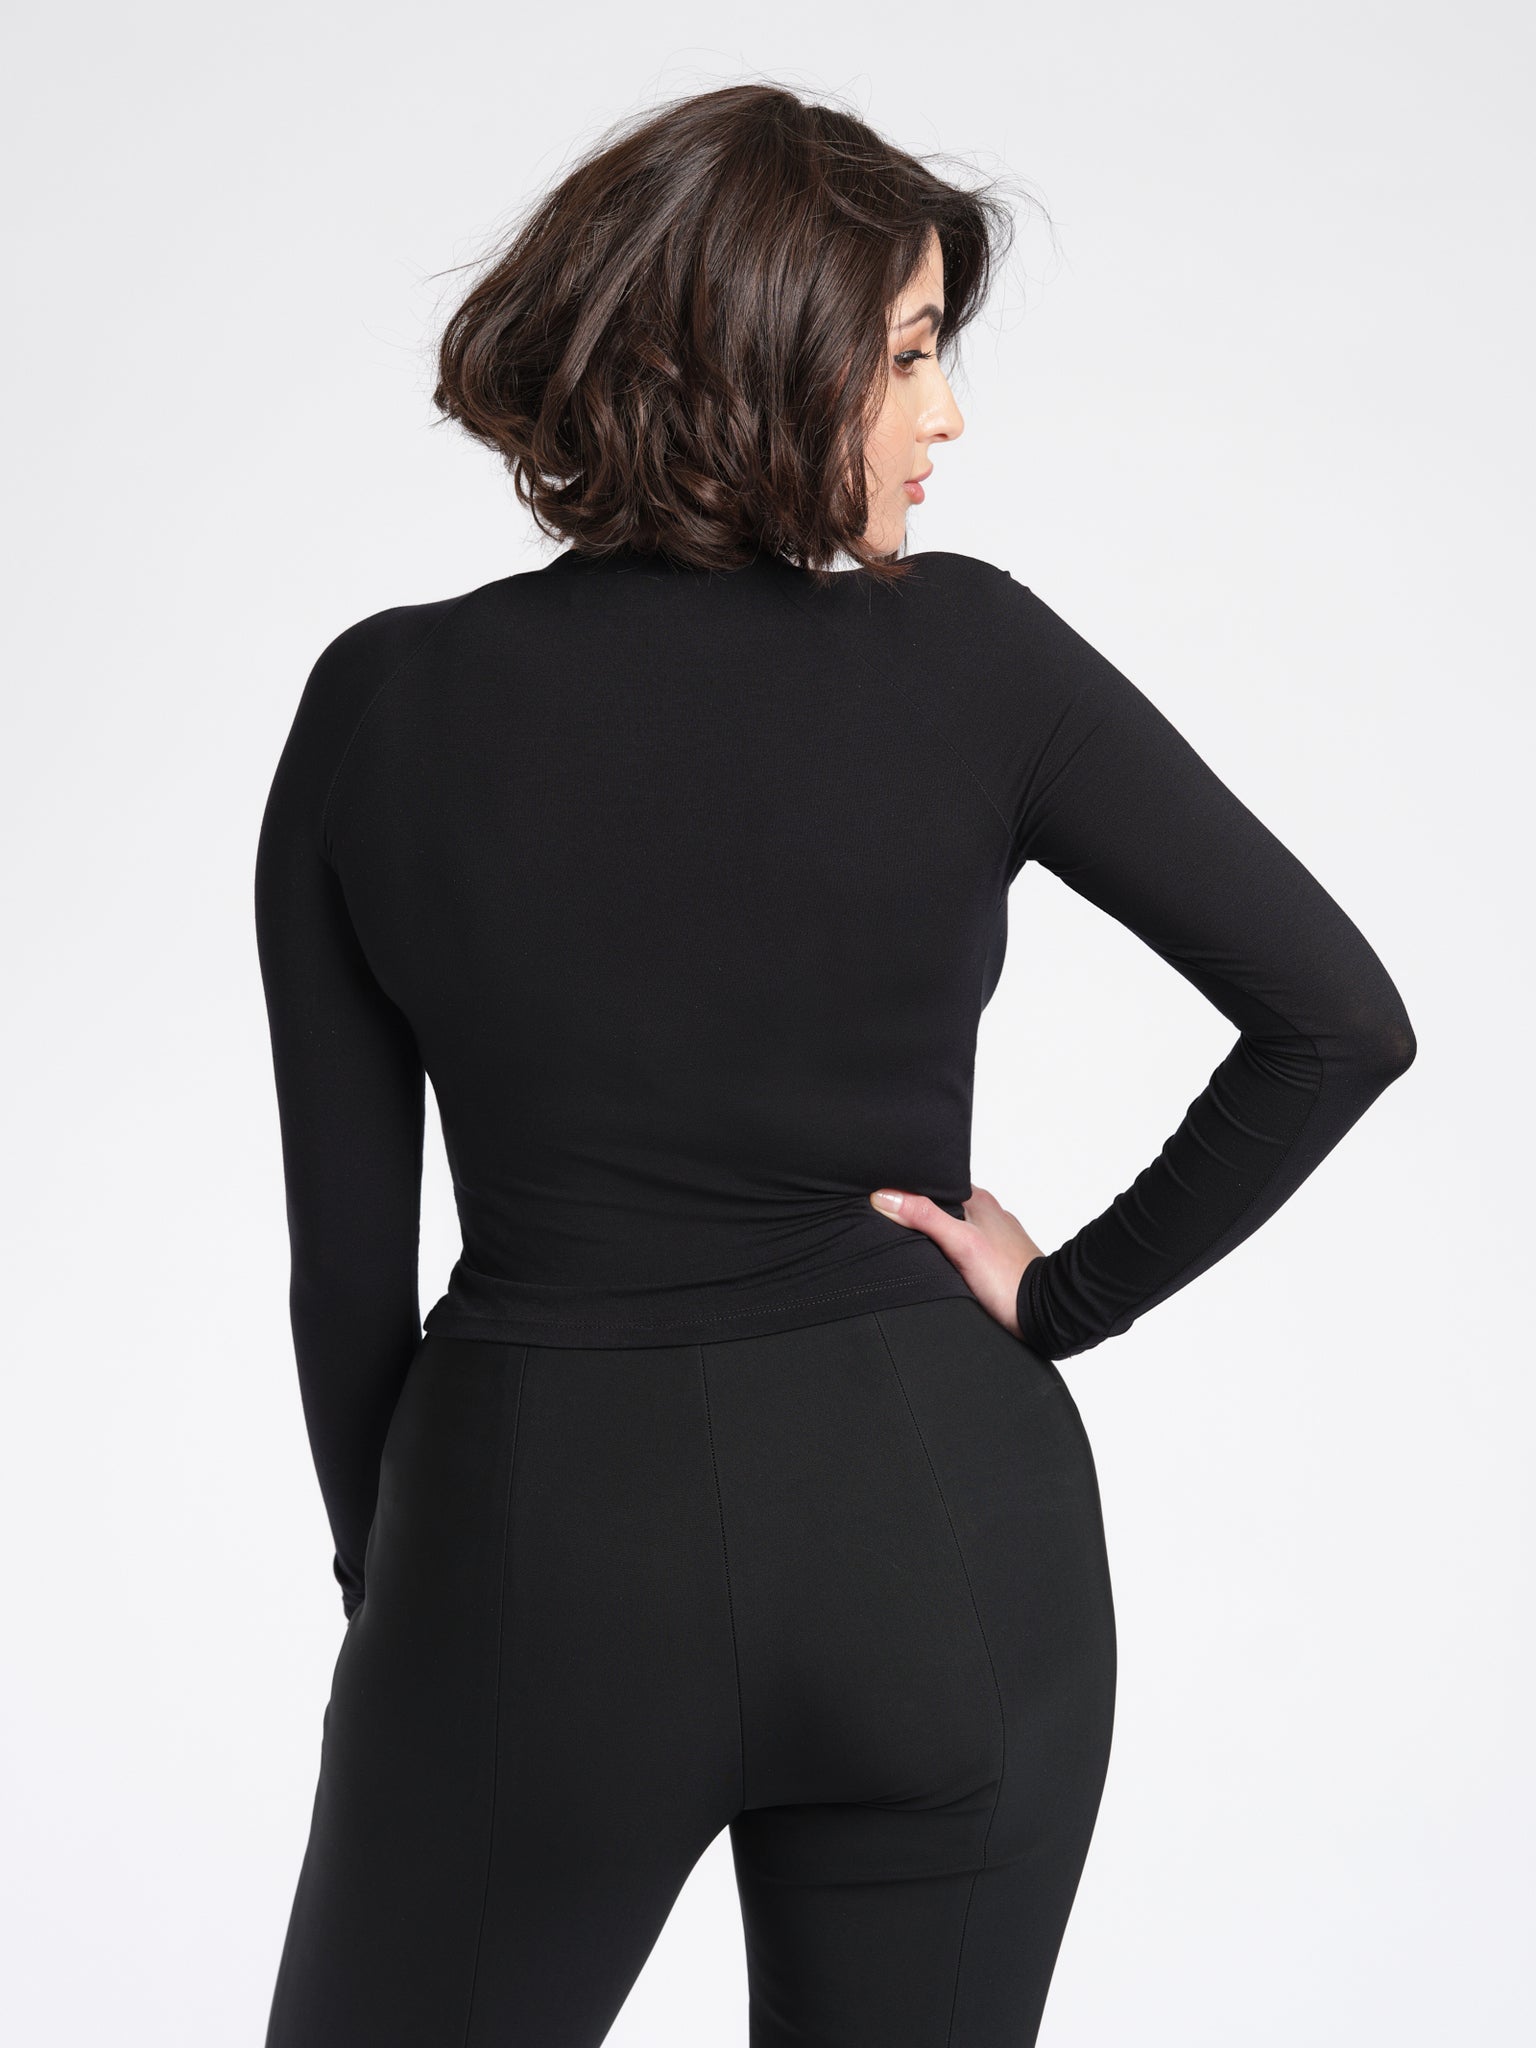 Brie pullover black back view long sleeve raglan.